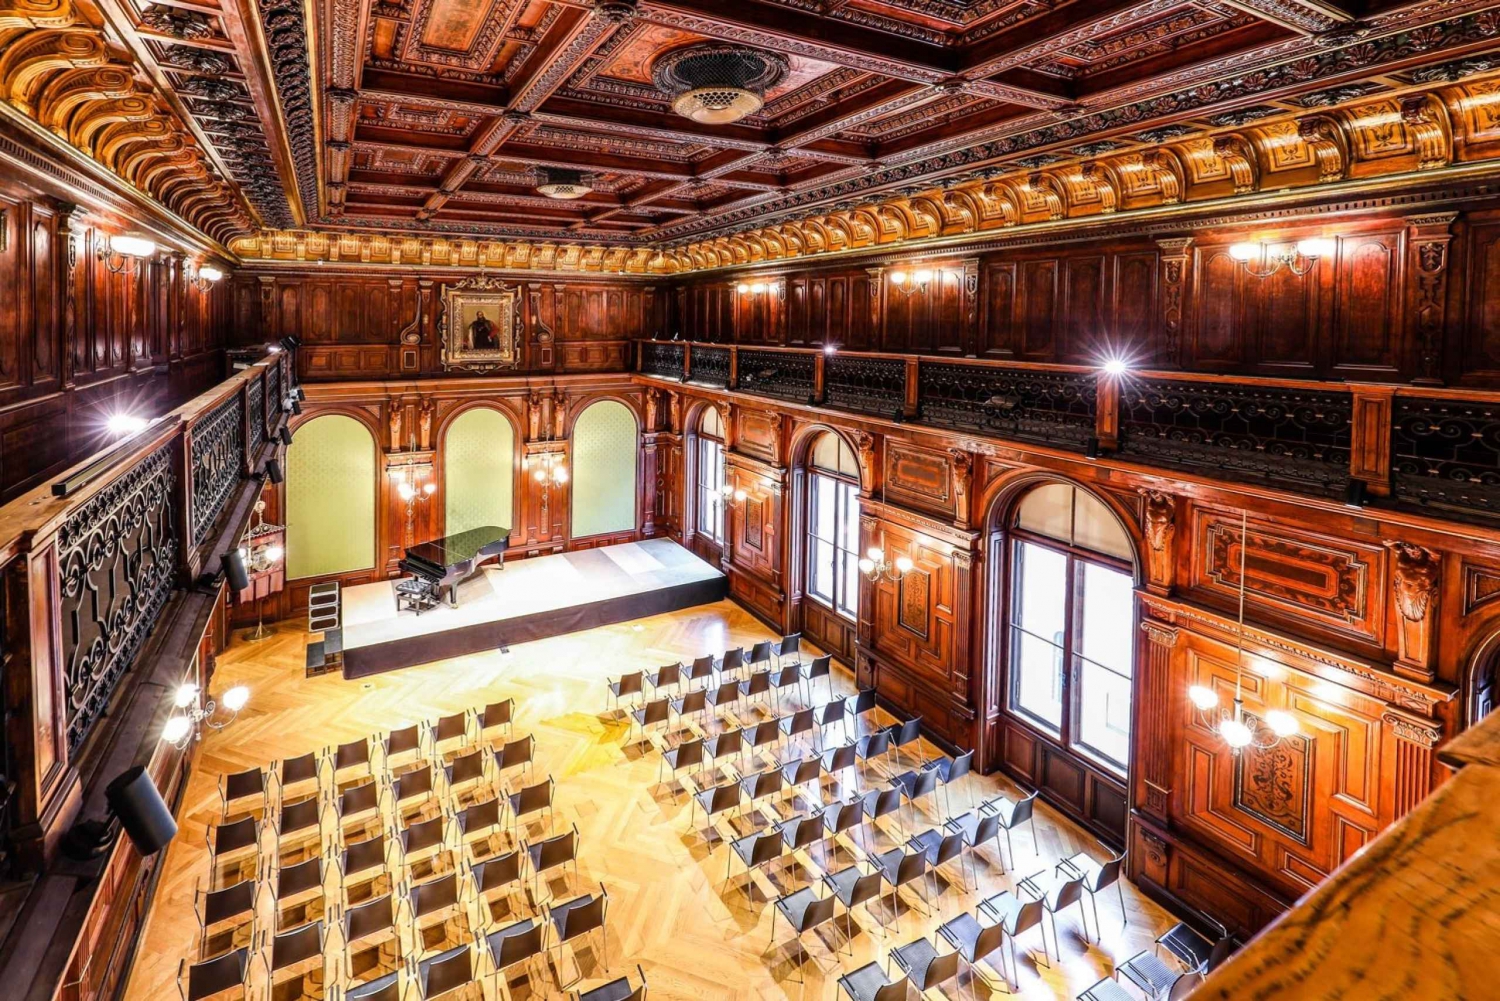 Wien: Klassisk konsert på Eschenbach Slott